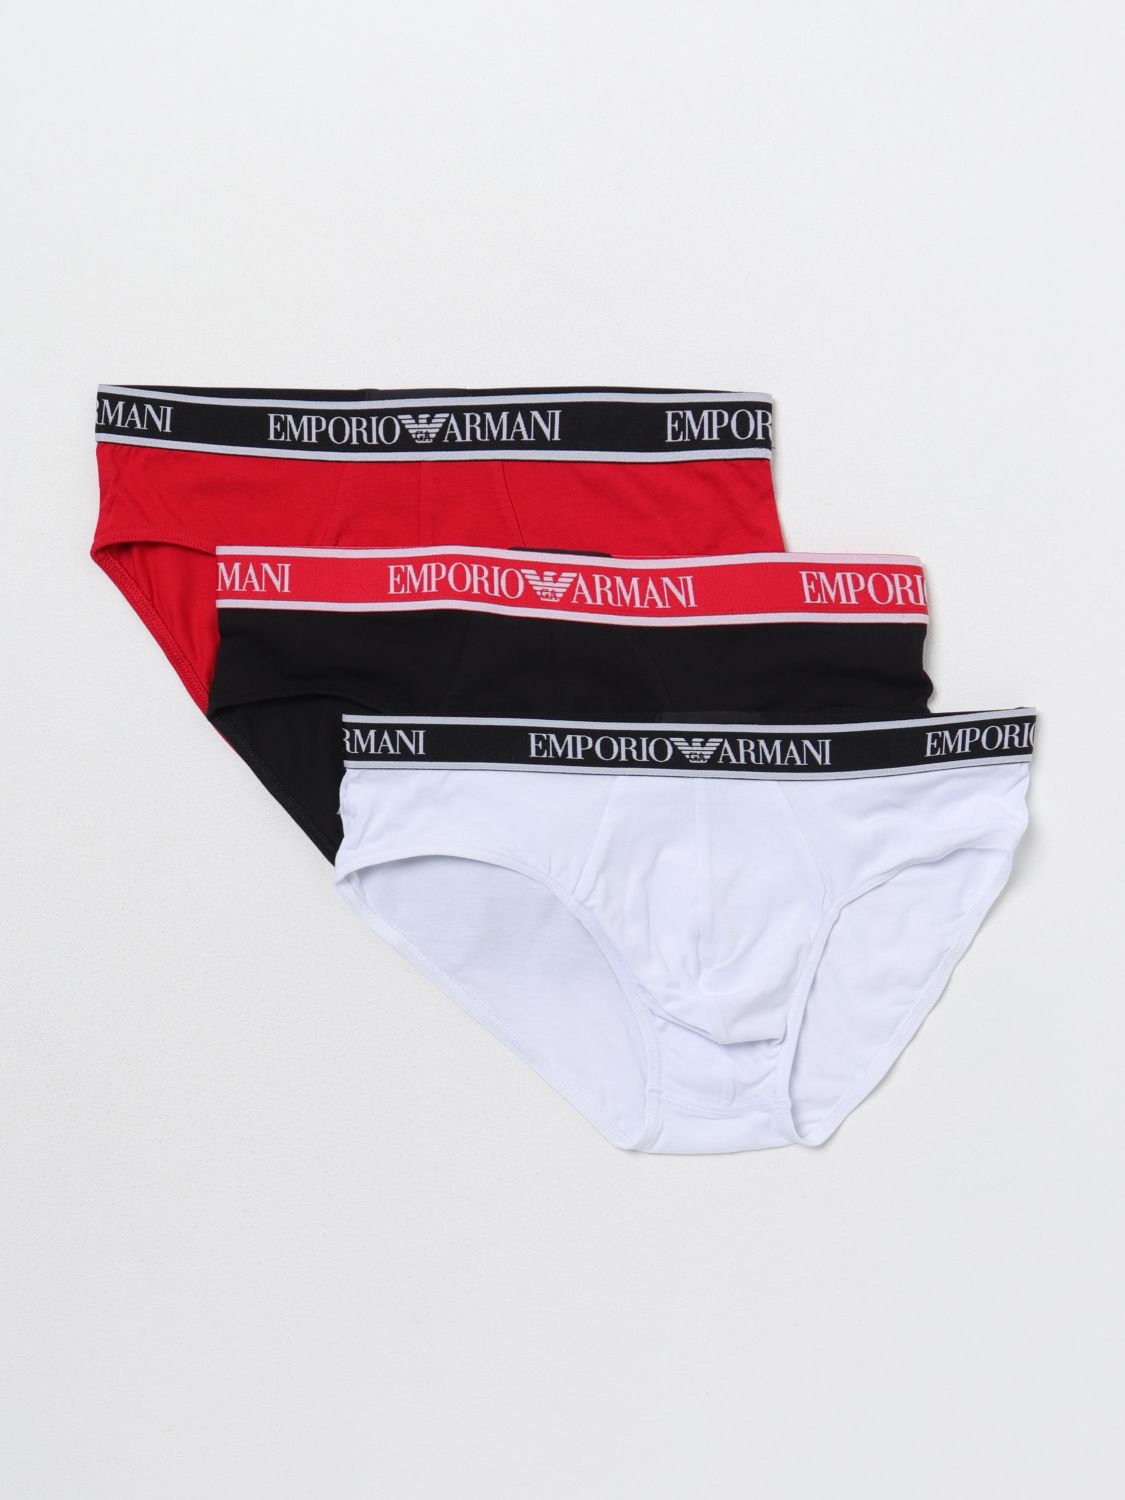 Emporio Armani Underwear Underwear EMPORIO ARMANI UNDERWEAR Men colour Red